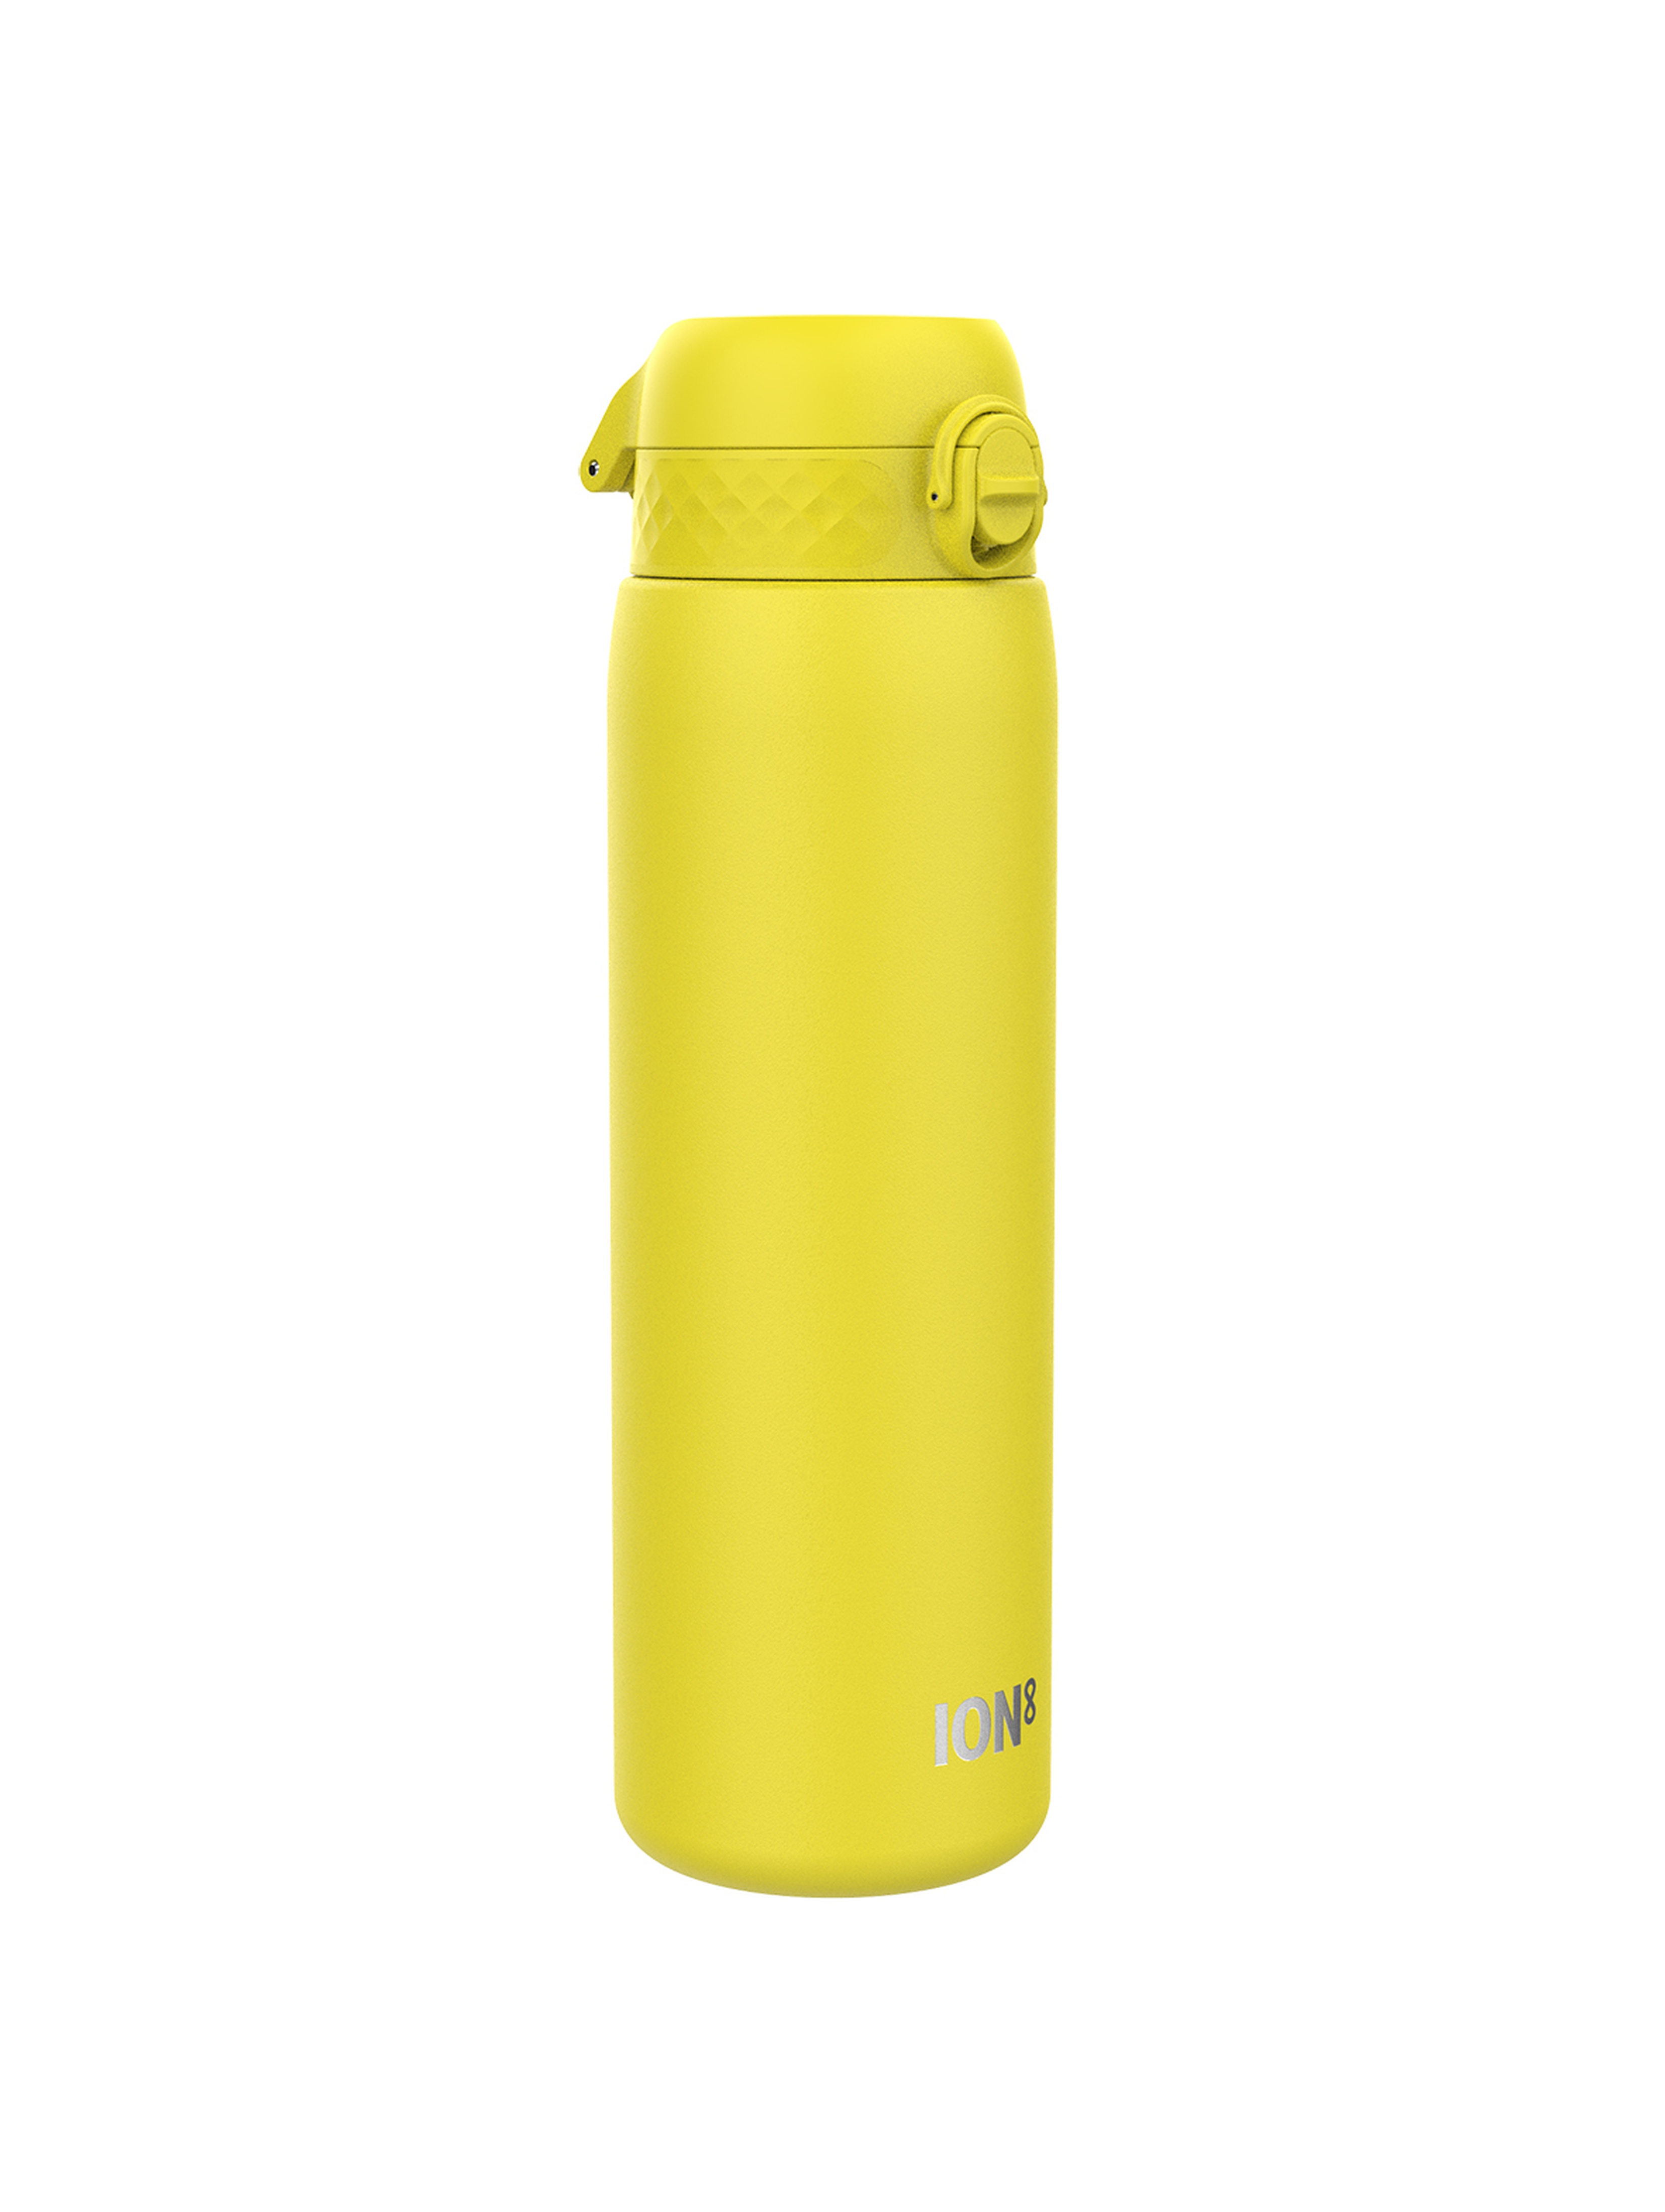 Butelka na wodę ION8 Double Wall Yellow 920ml - żółta